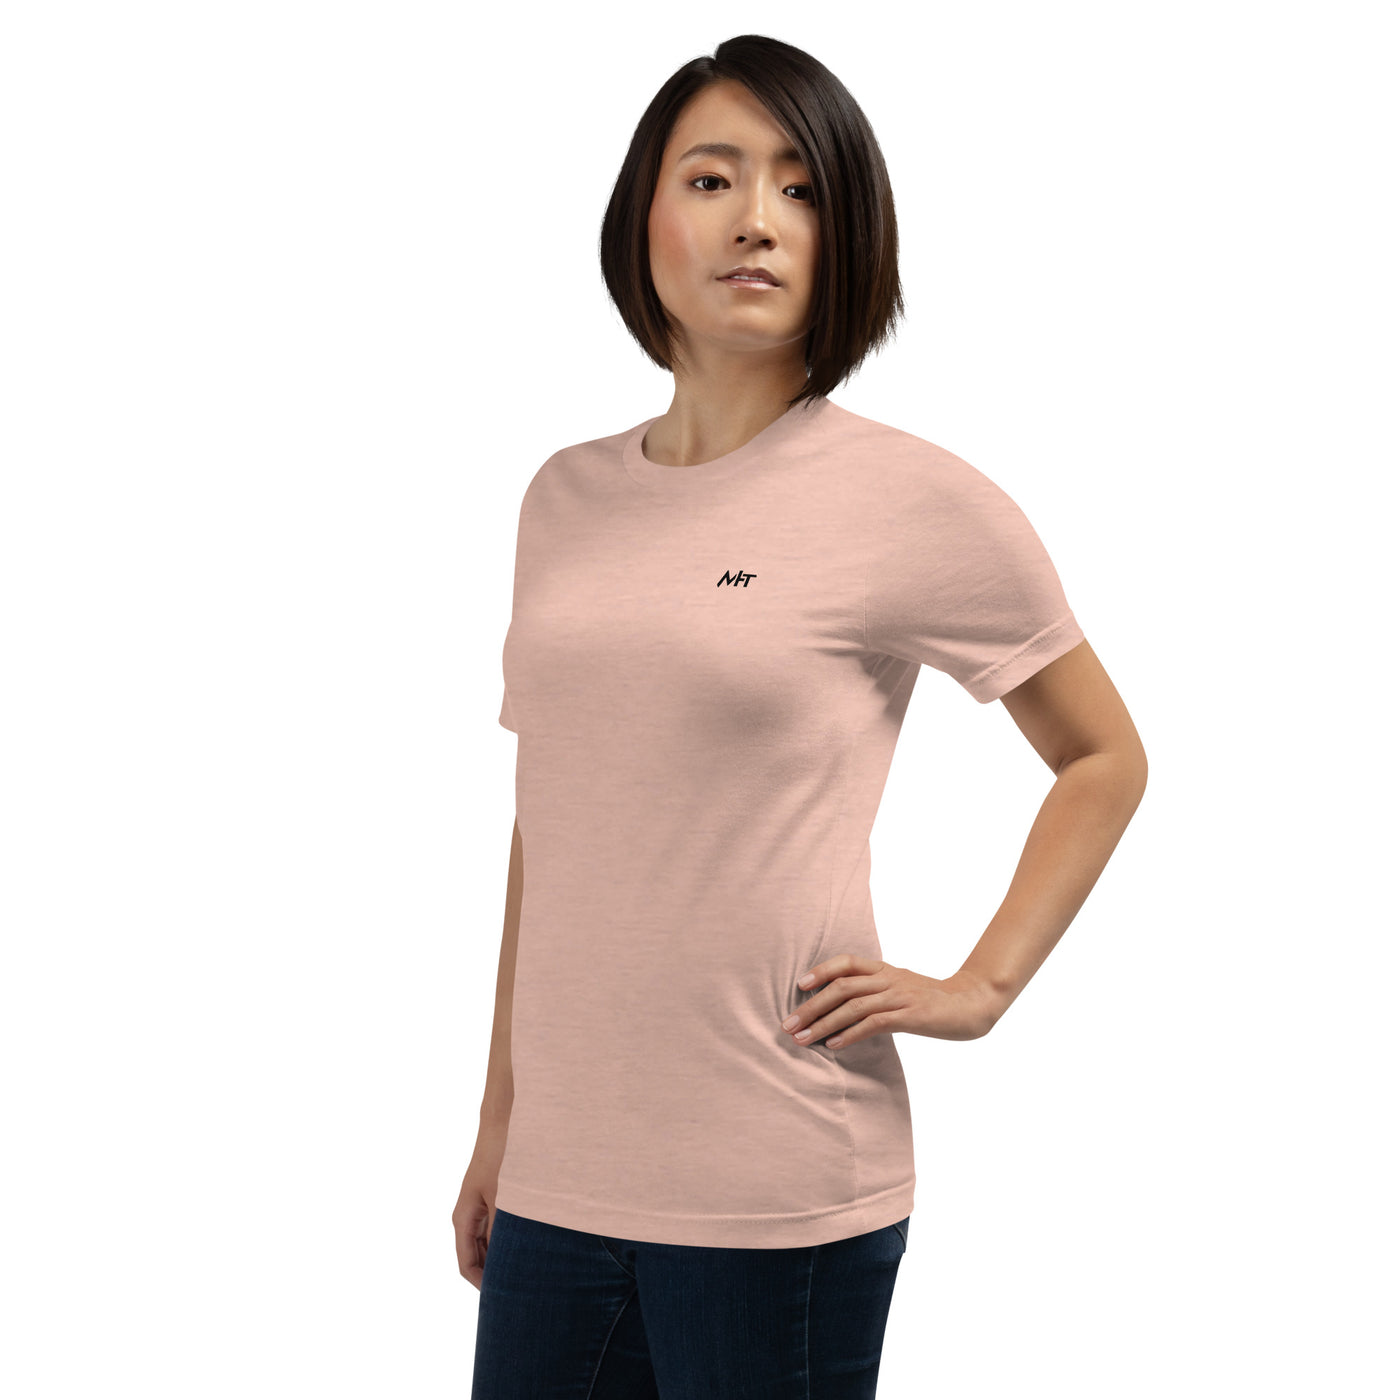 Levelling up to Big Sister for light color - Unisex t-shirt ( Back Print )